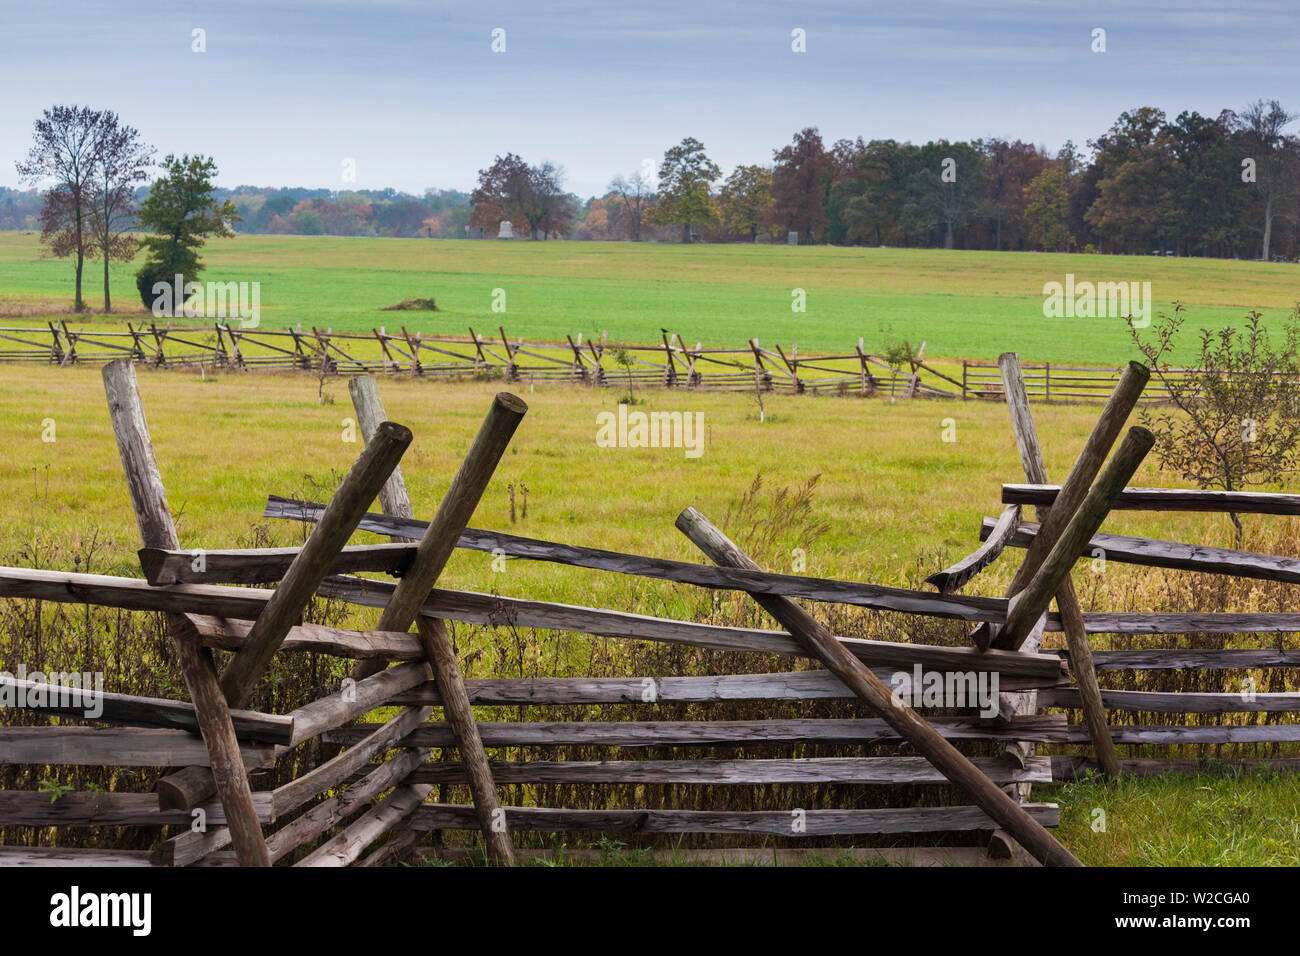 USA, Pennsylvania, Gettysburg, Battle of Gettysburg, battlefield fence Stock Photo